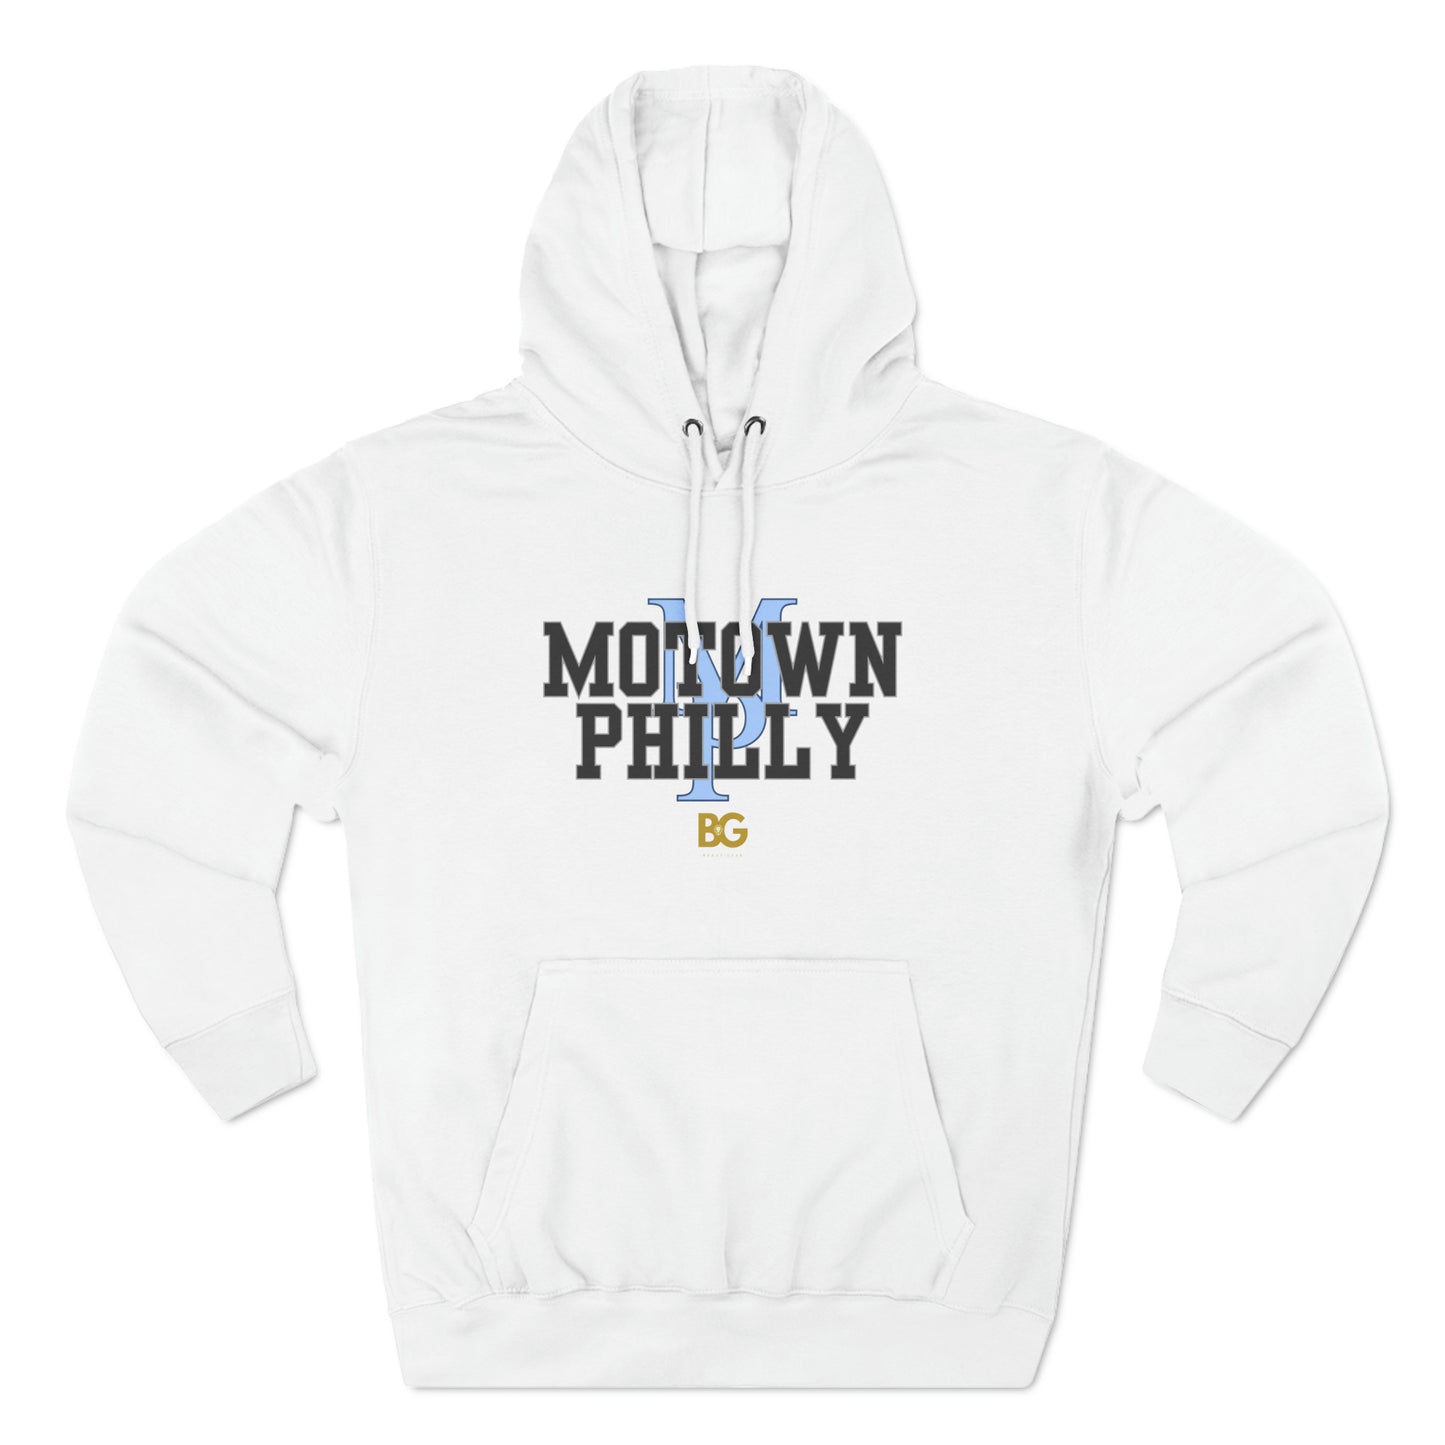 BG "Motown Philly" Premium Pullover Hoodie